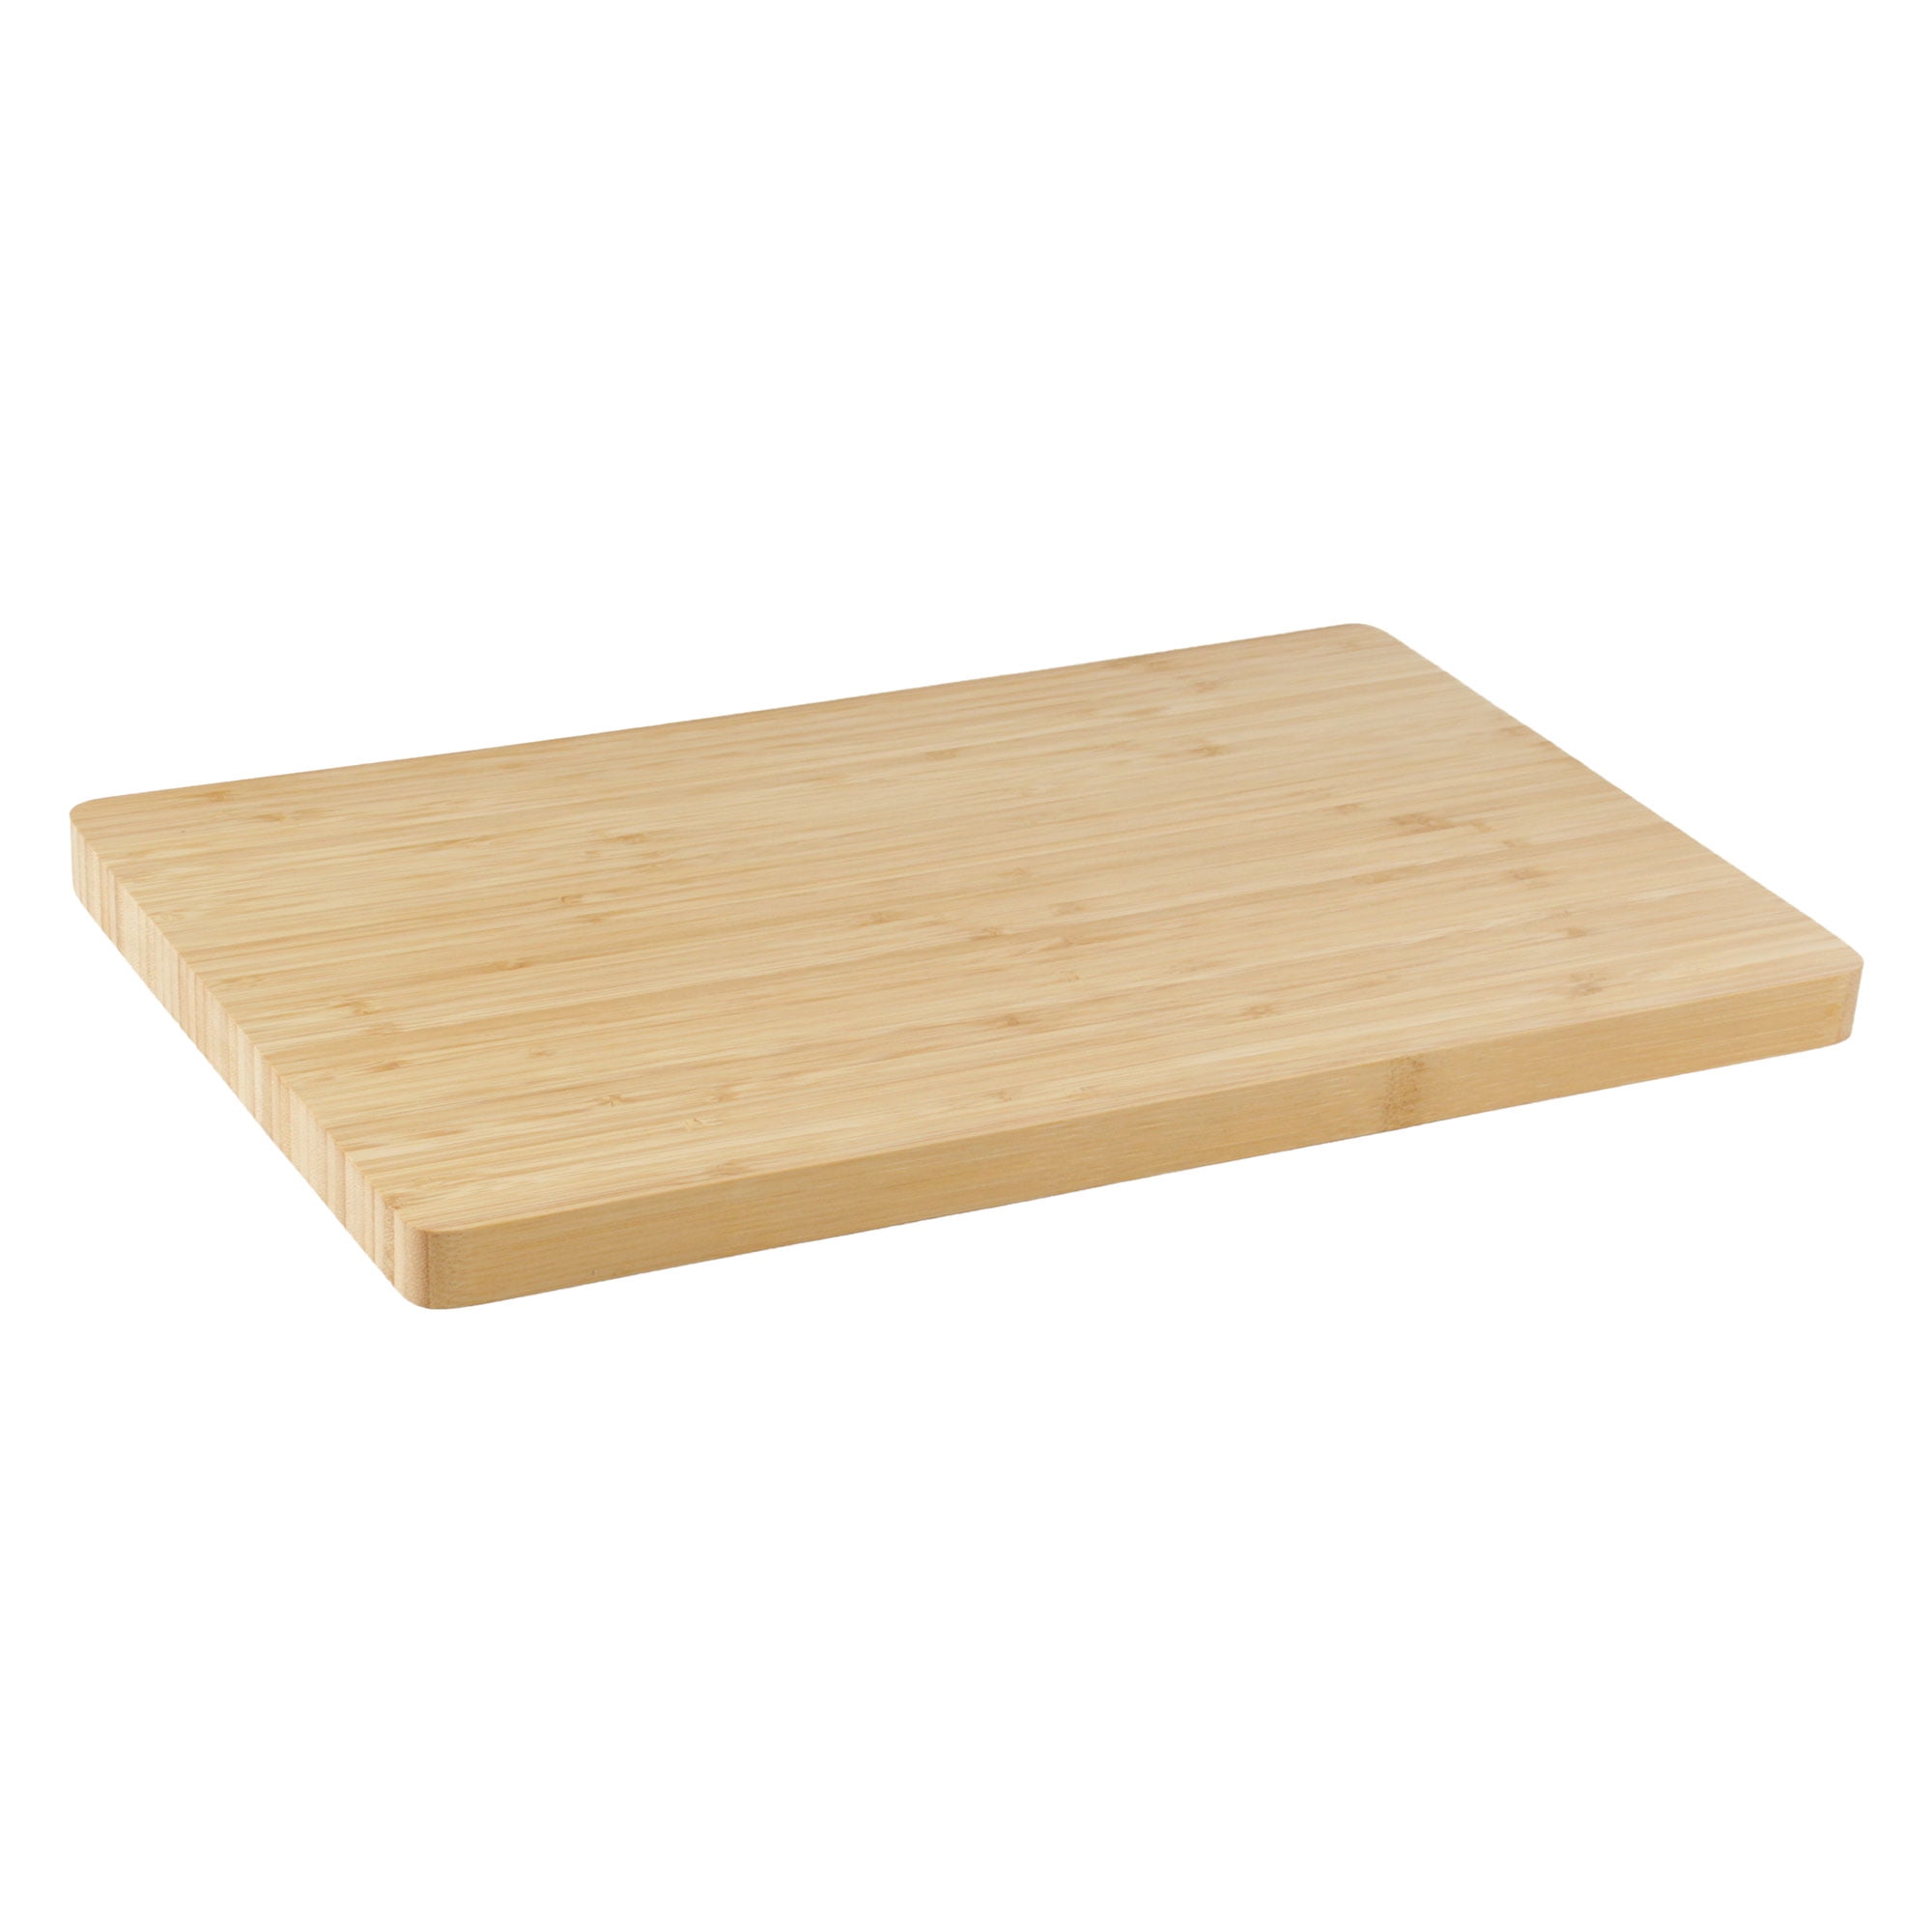 BambooMN Bulk Wholesale Premium Bamboo Small Cheese Cutting Board - 7.9 inch x 5.5 inch x 0.4 inch - 3 Pieces